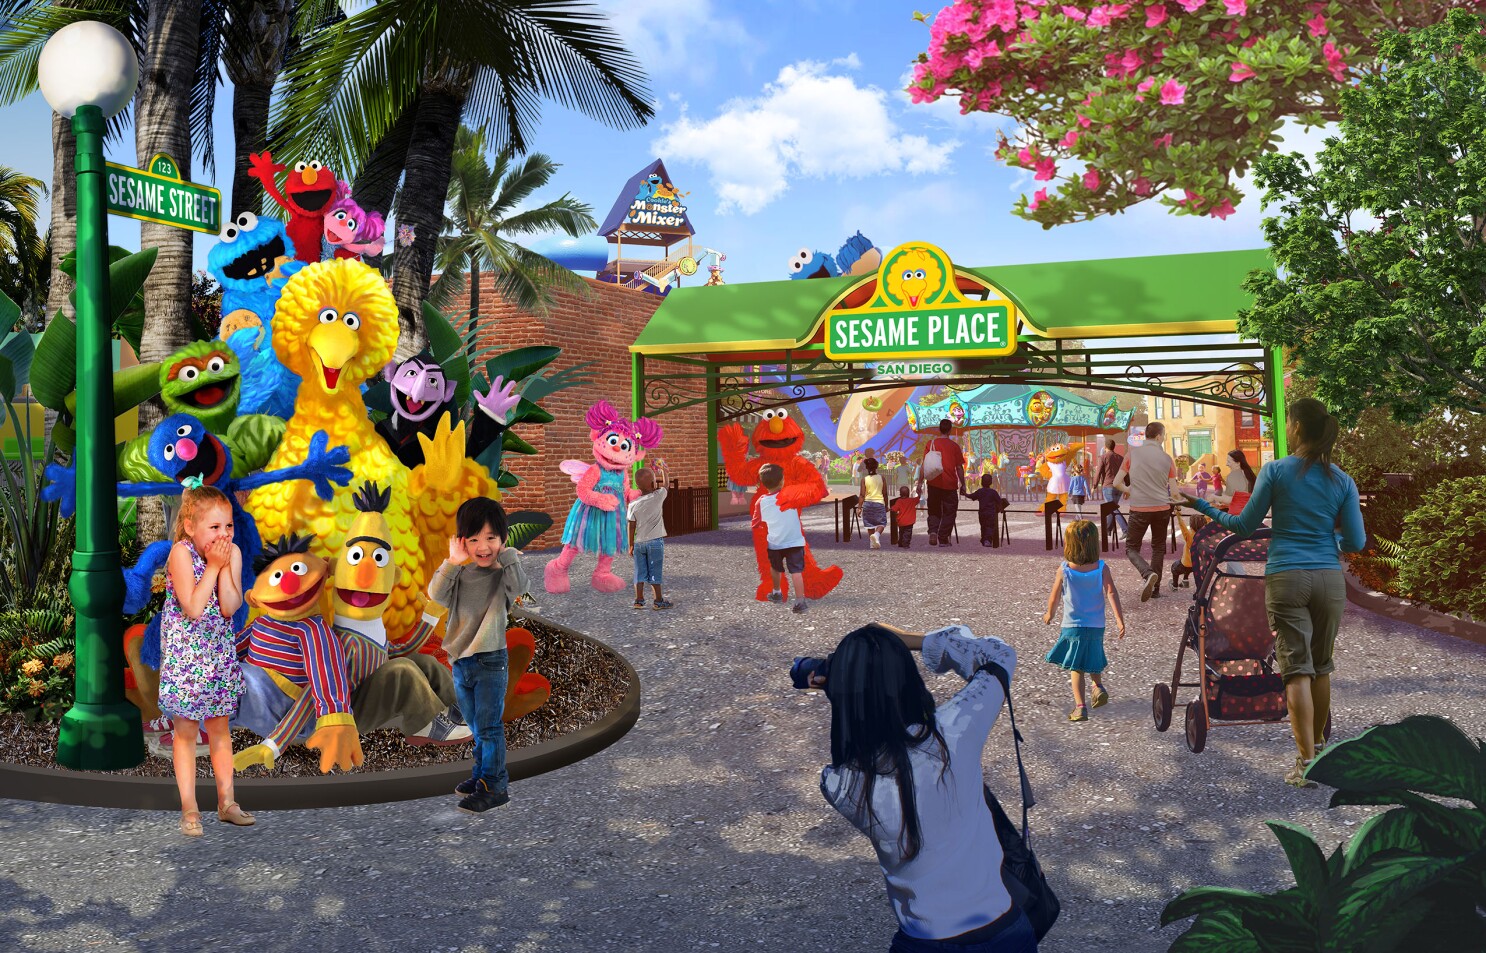 Seaworld Plans A New San Diego Sesame Place Theme Park The San Diego Union Tribune